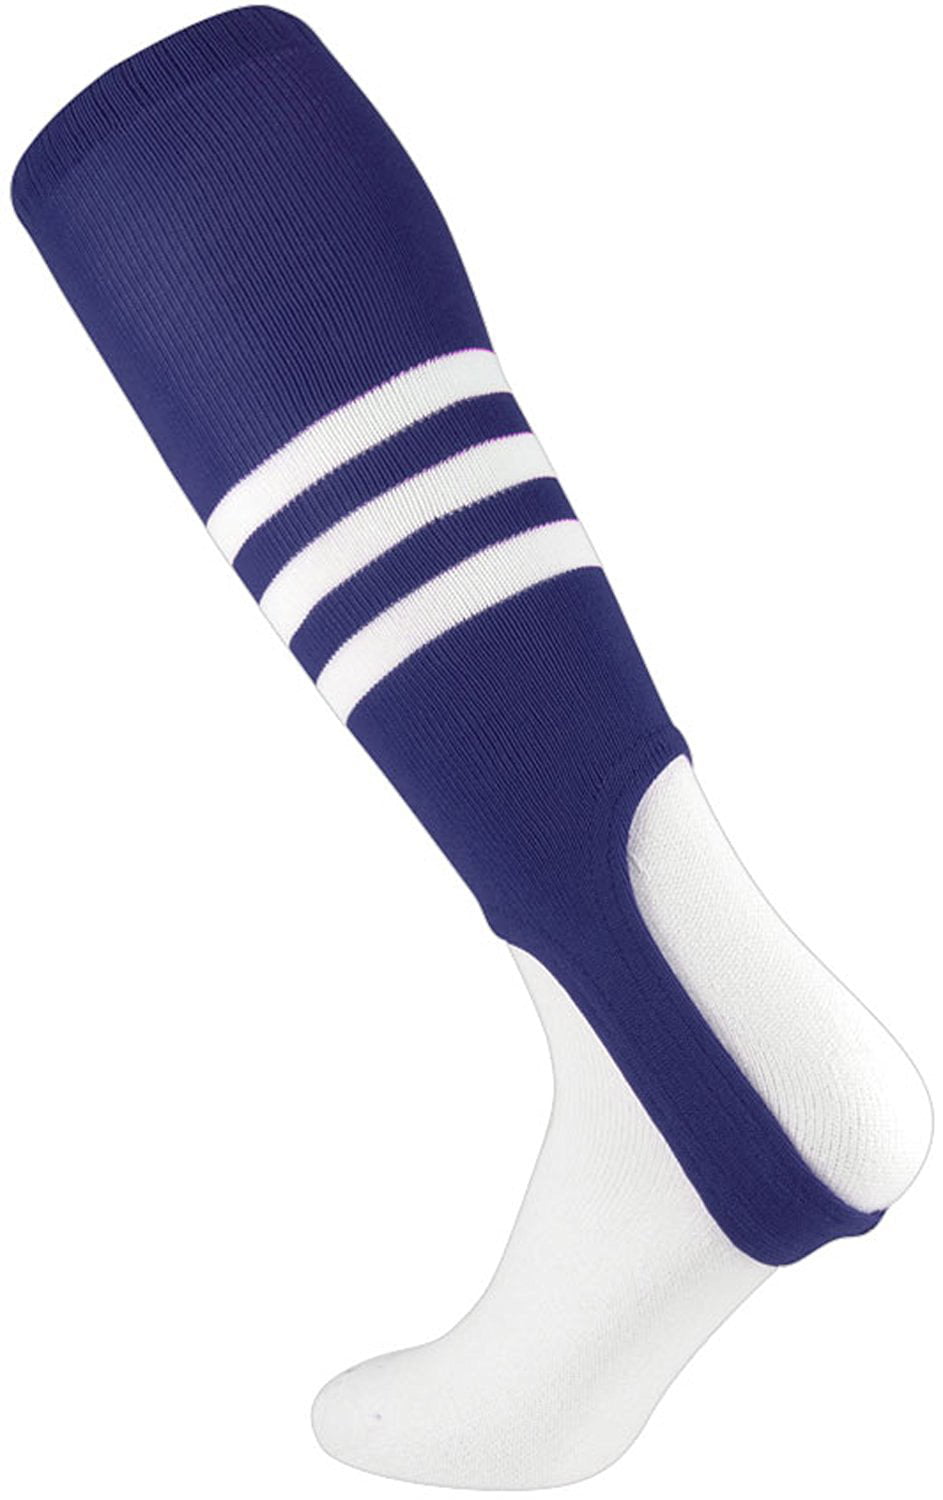 Twin City Adult 7" Stirrup Pattern Sock 